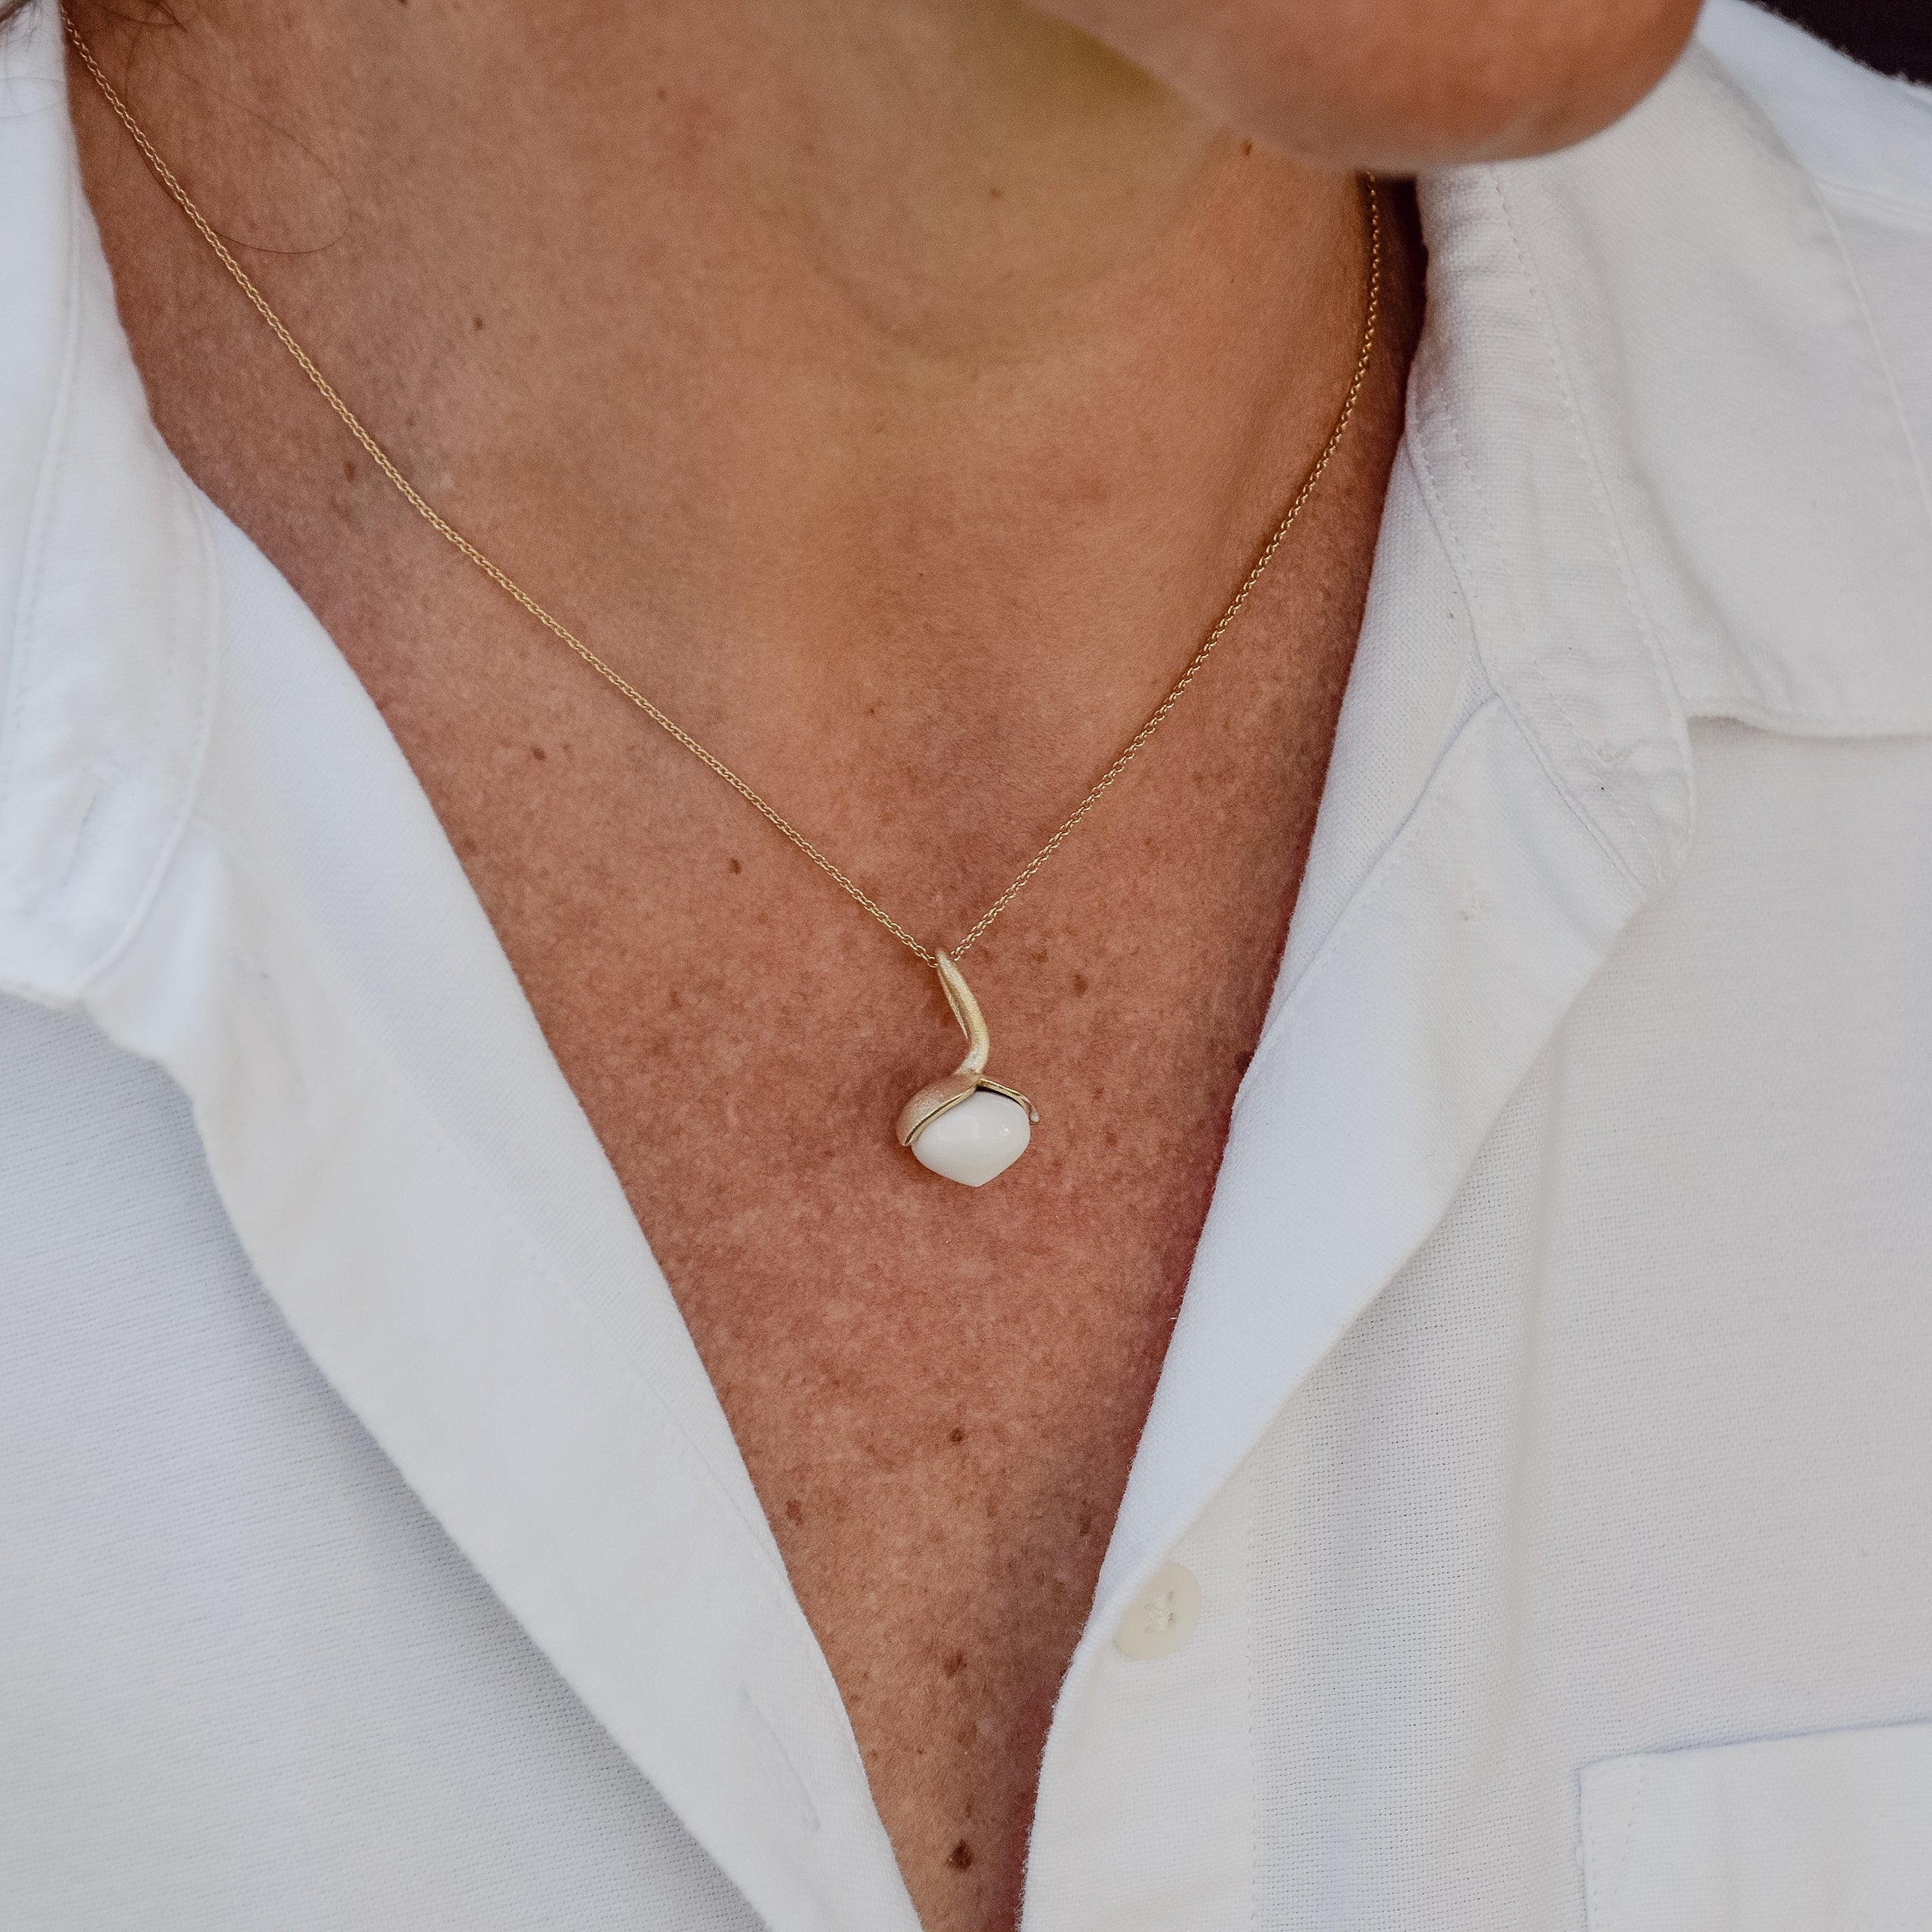 Dolce pendant "medium" with Kascholong 925/-